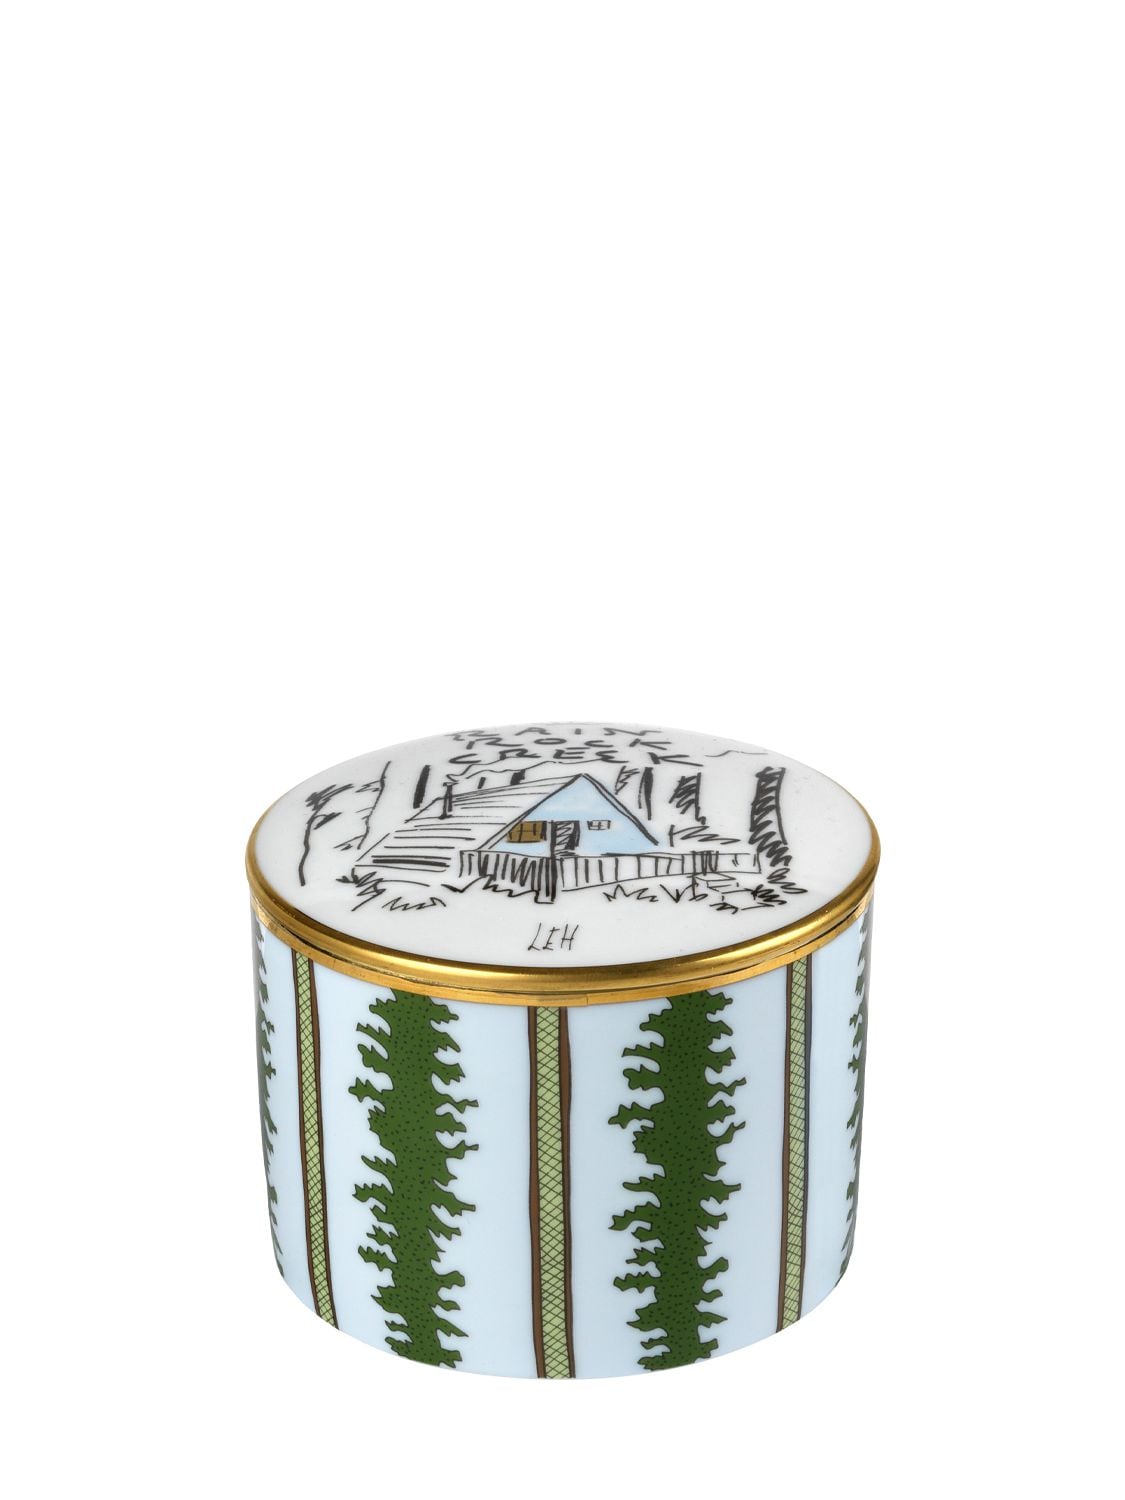 Image of Rain Rock Creek Porcelain Box